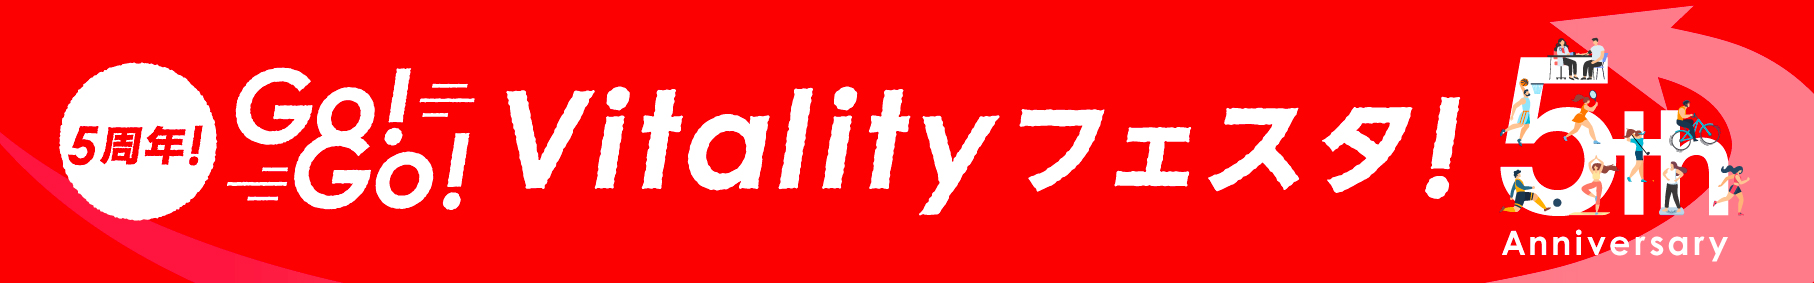 Vitality5周年プロモーション